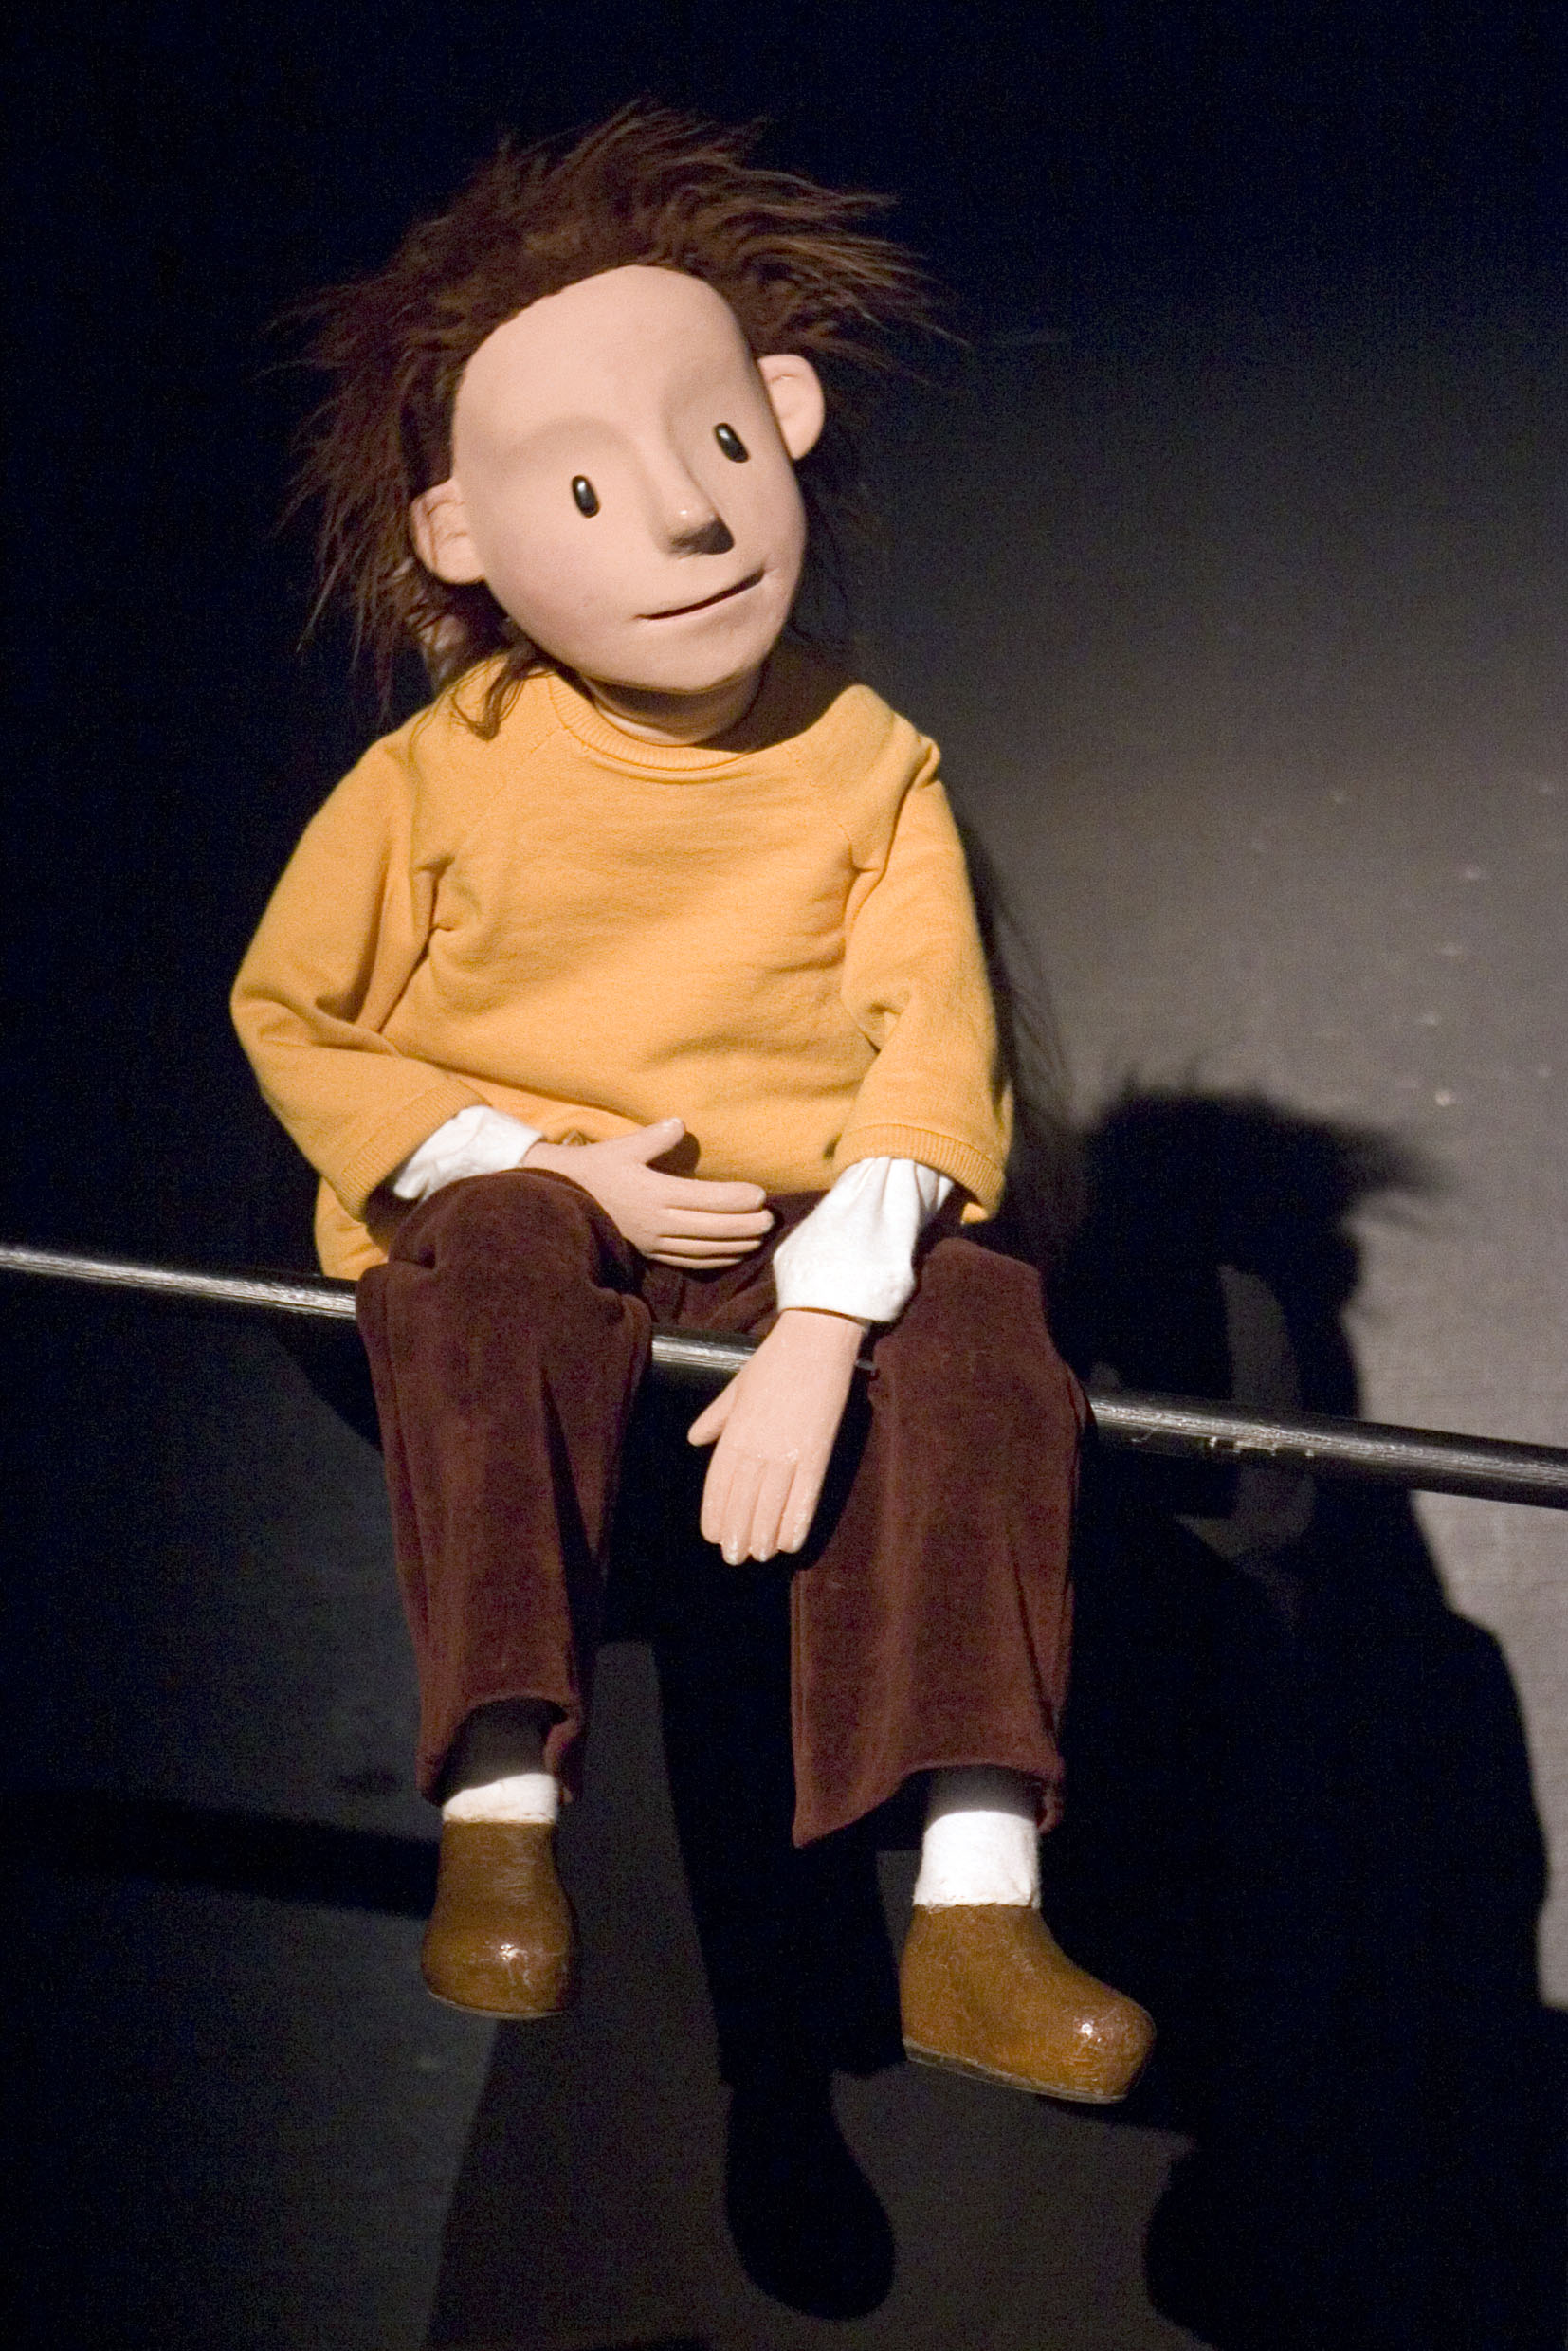 Ur Else-Marie och småpapporna på Marionetteatern, Stockholms stadsteater